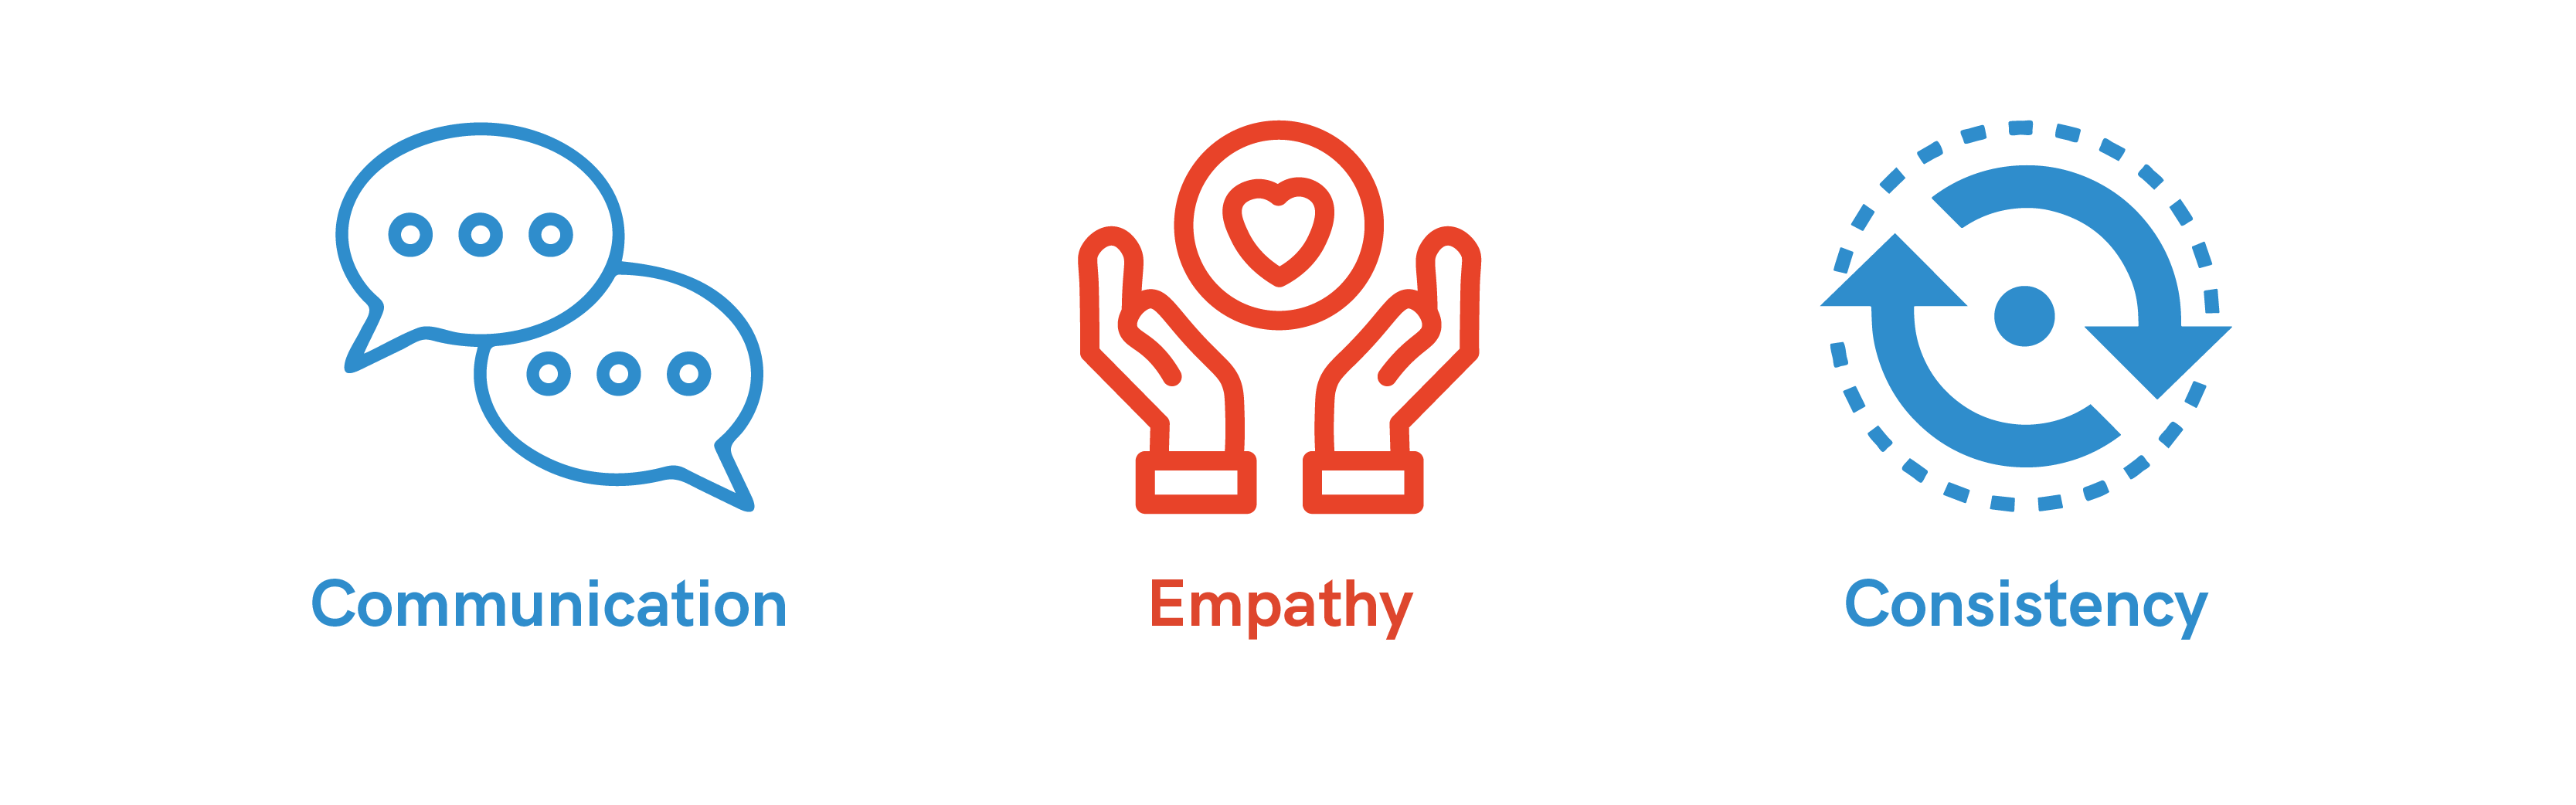 communication_empathy_consistency